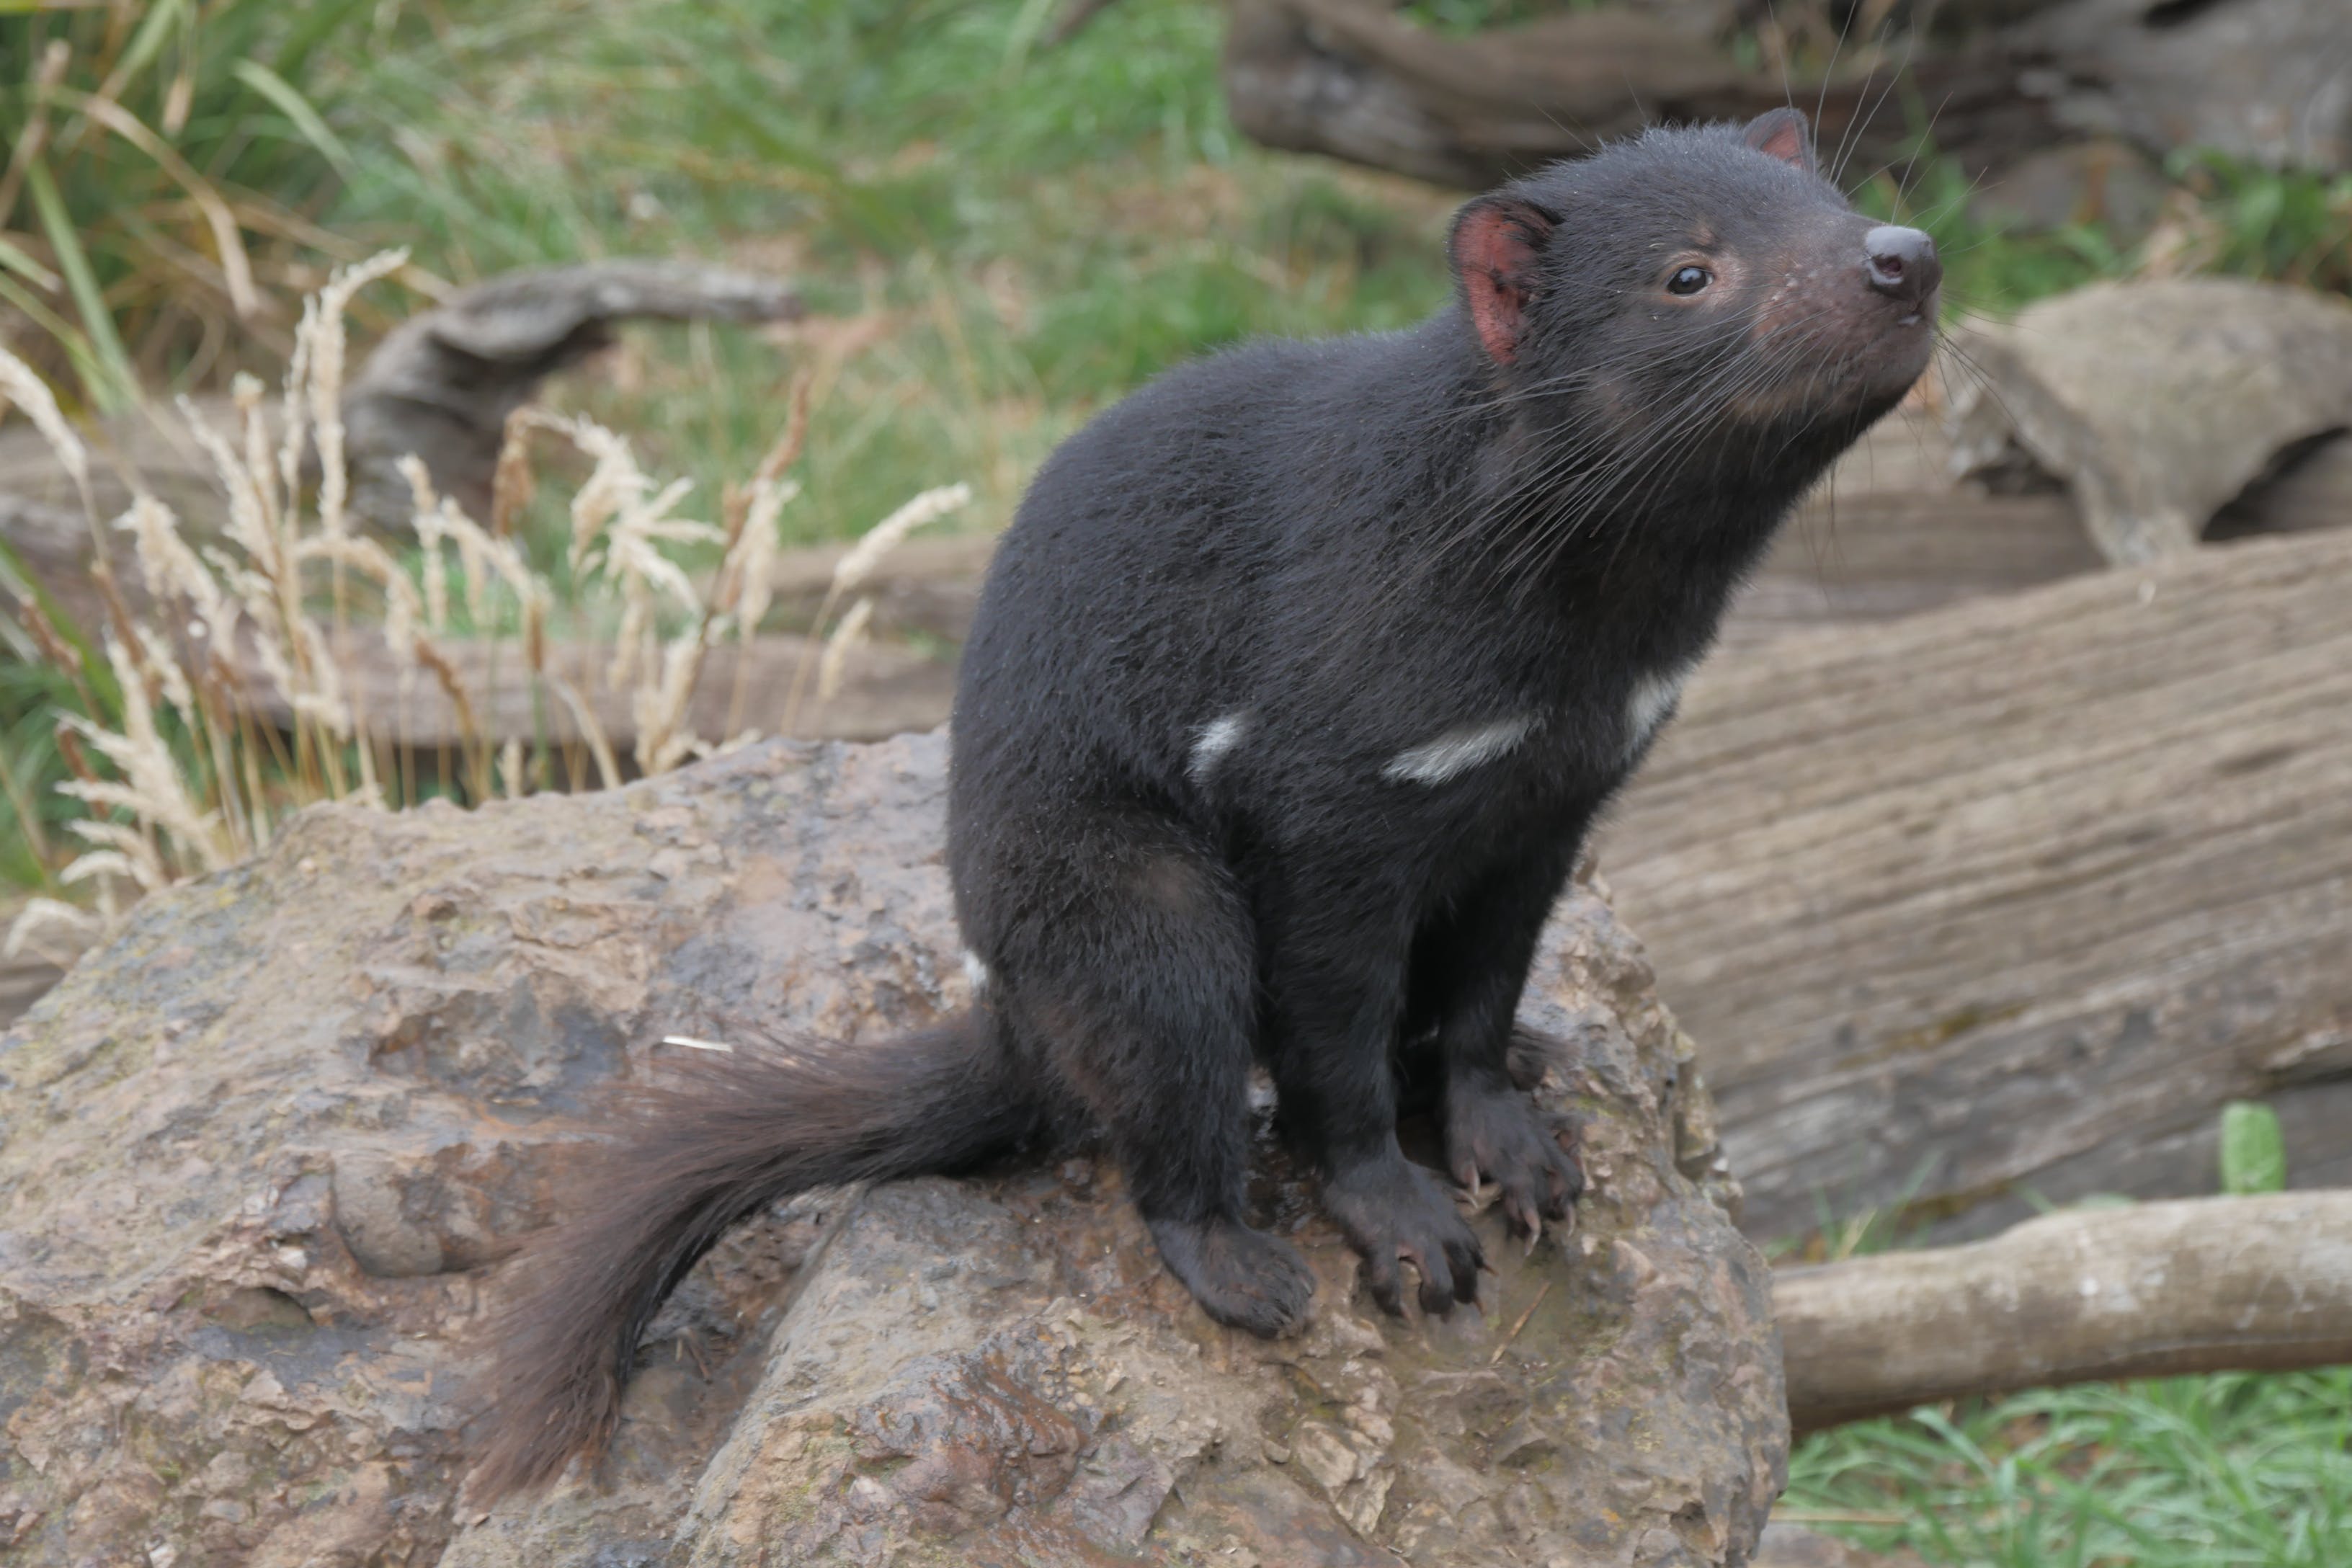 Gratis Fotos de stock gratuitas de animal, de cerca, demonio de tasmania Foto de stock